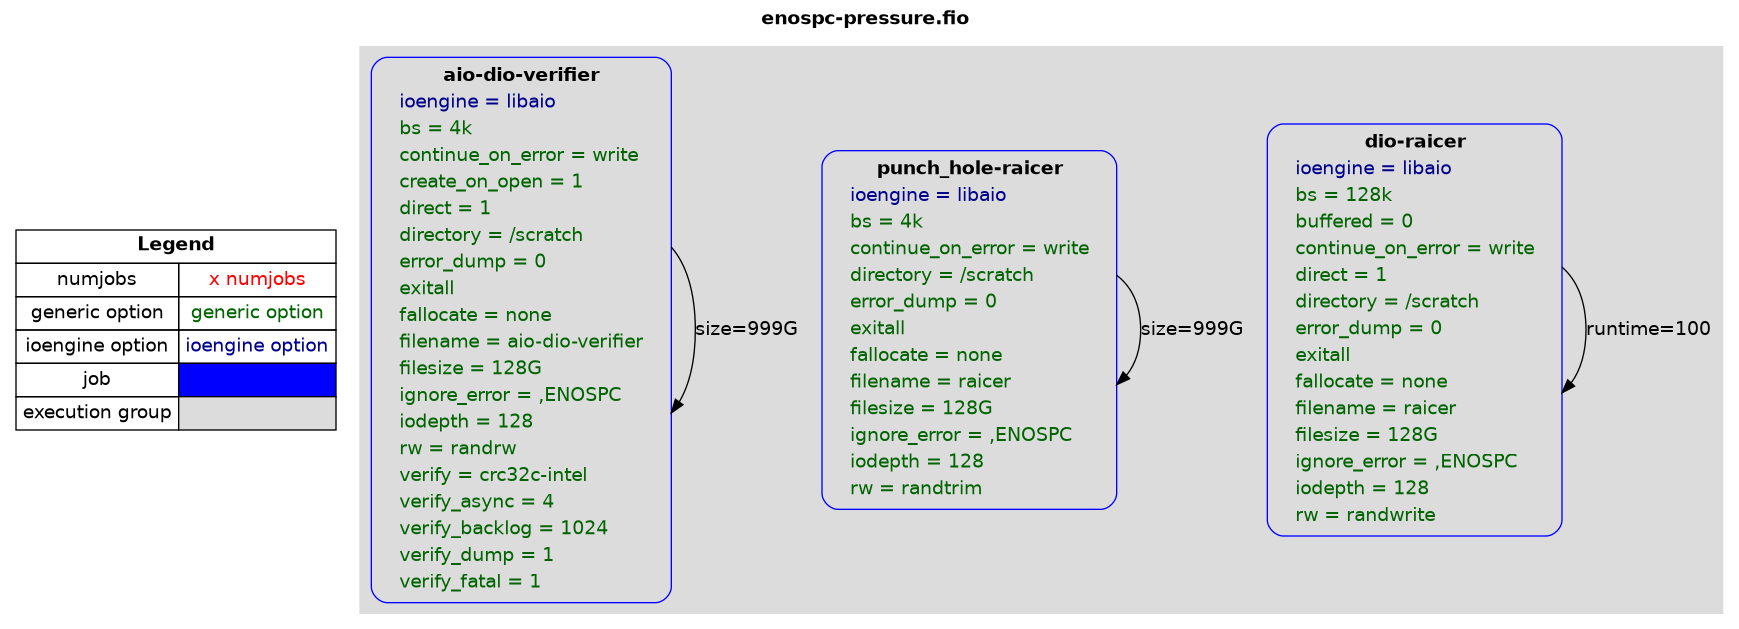 examples/enospc-pressure.png